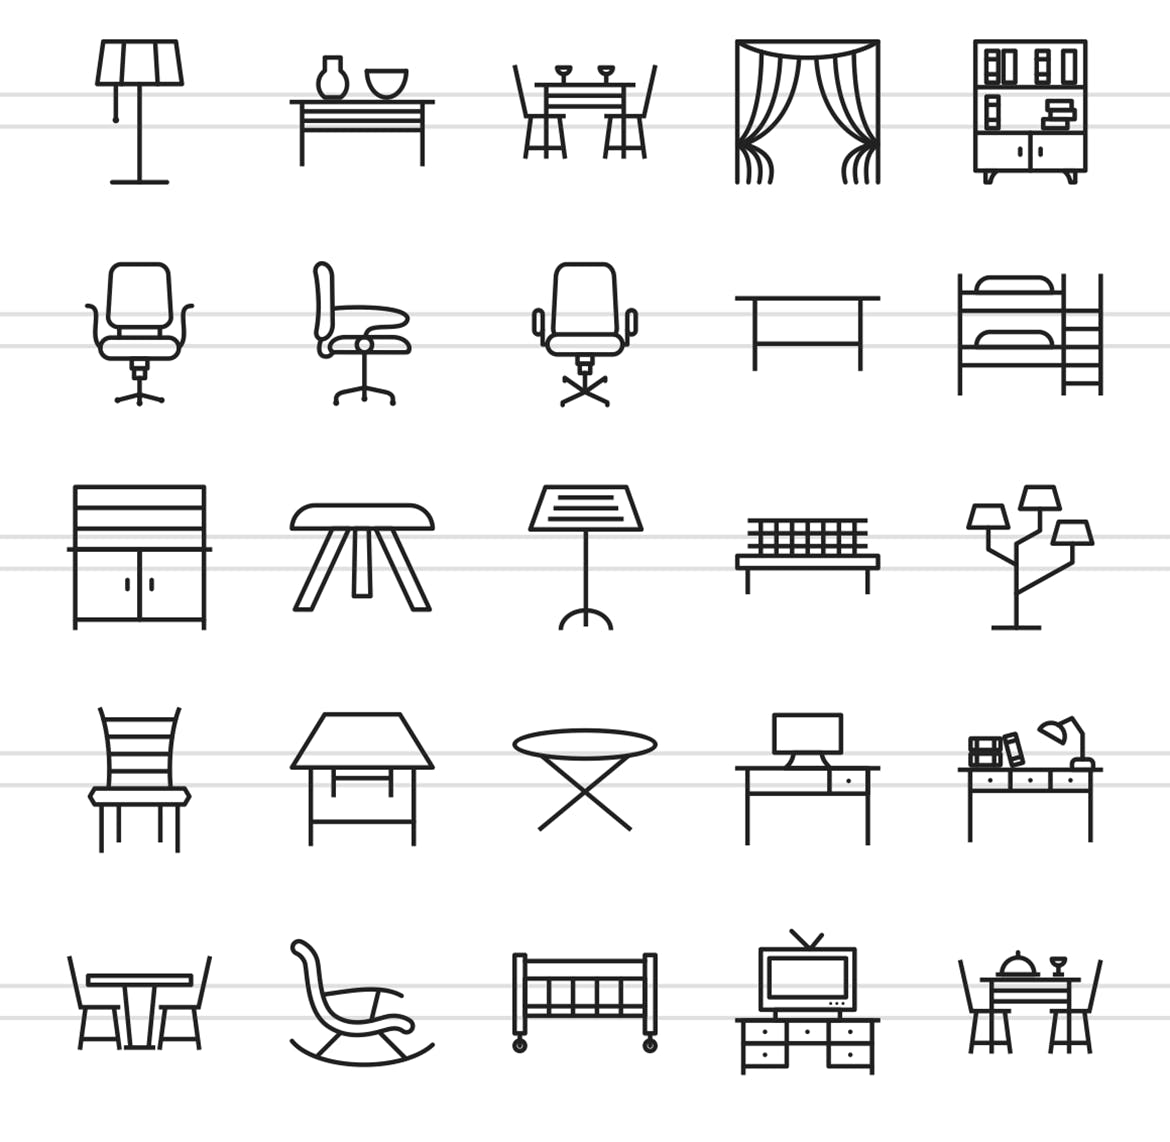 50枚家具系列线性16设计素材网精选图标 II 50 Furniture Line Icons Season II插图(2)